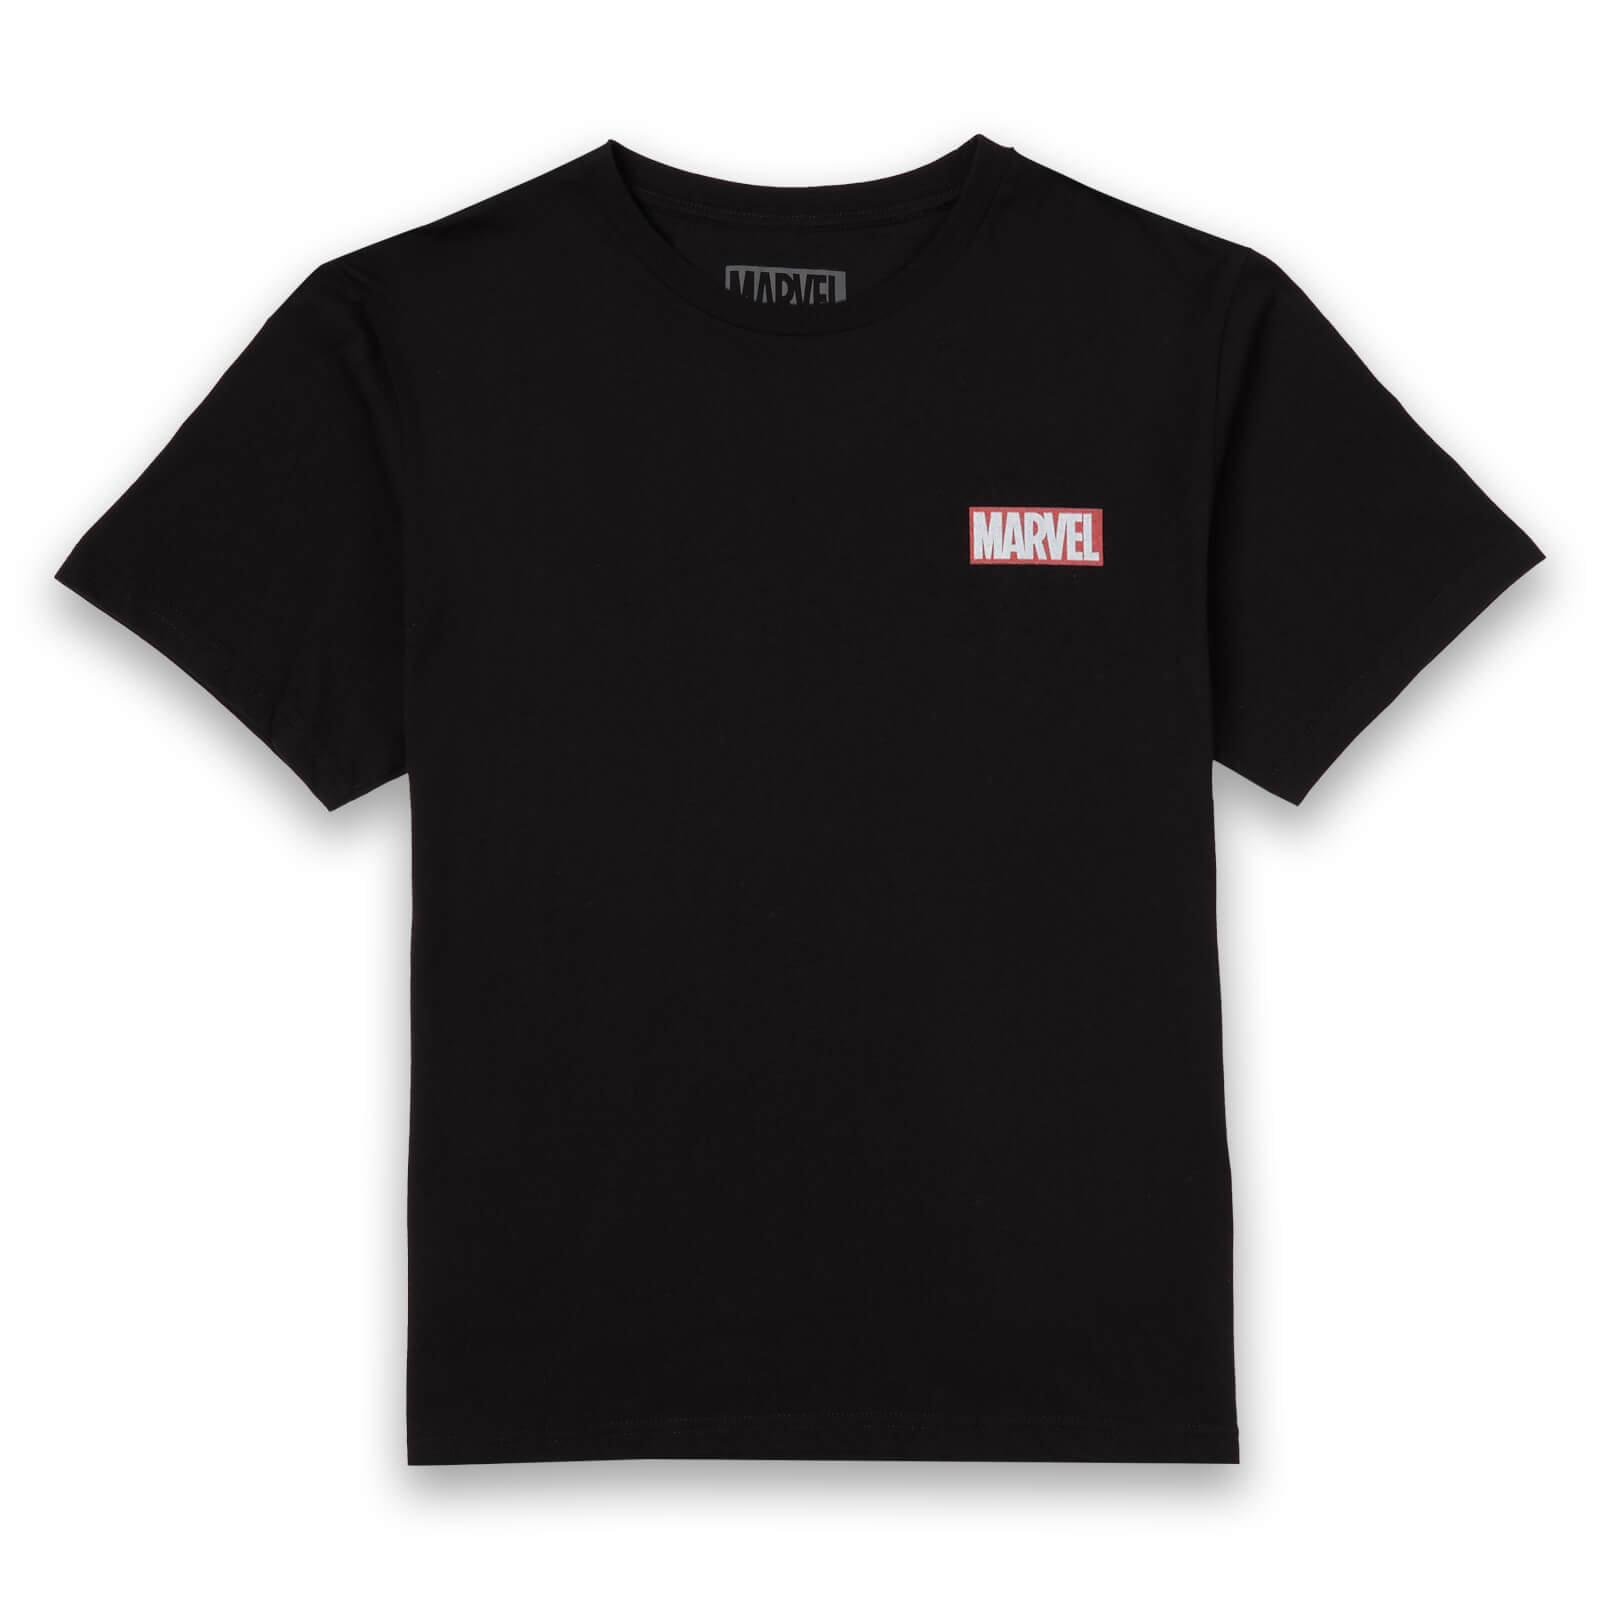 Marvel 10 Year Anniversary Line Up Men's T-Shirt - Black - M